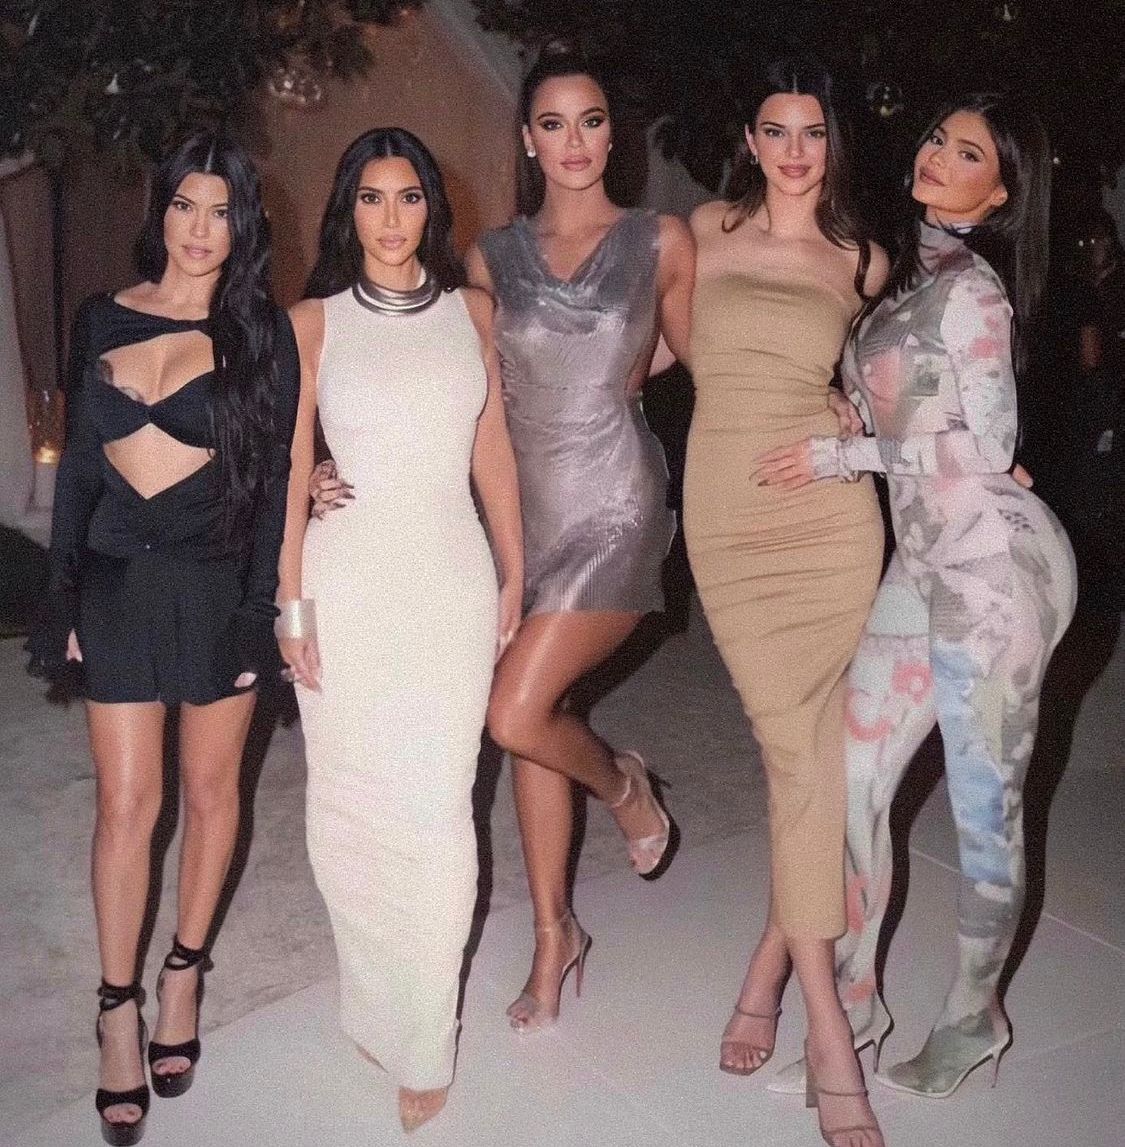 Las hermanas son un grupo femenino muy importante en Estados Unidos 
(Foto: Instagram/@kimkardashian)